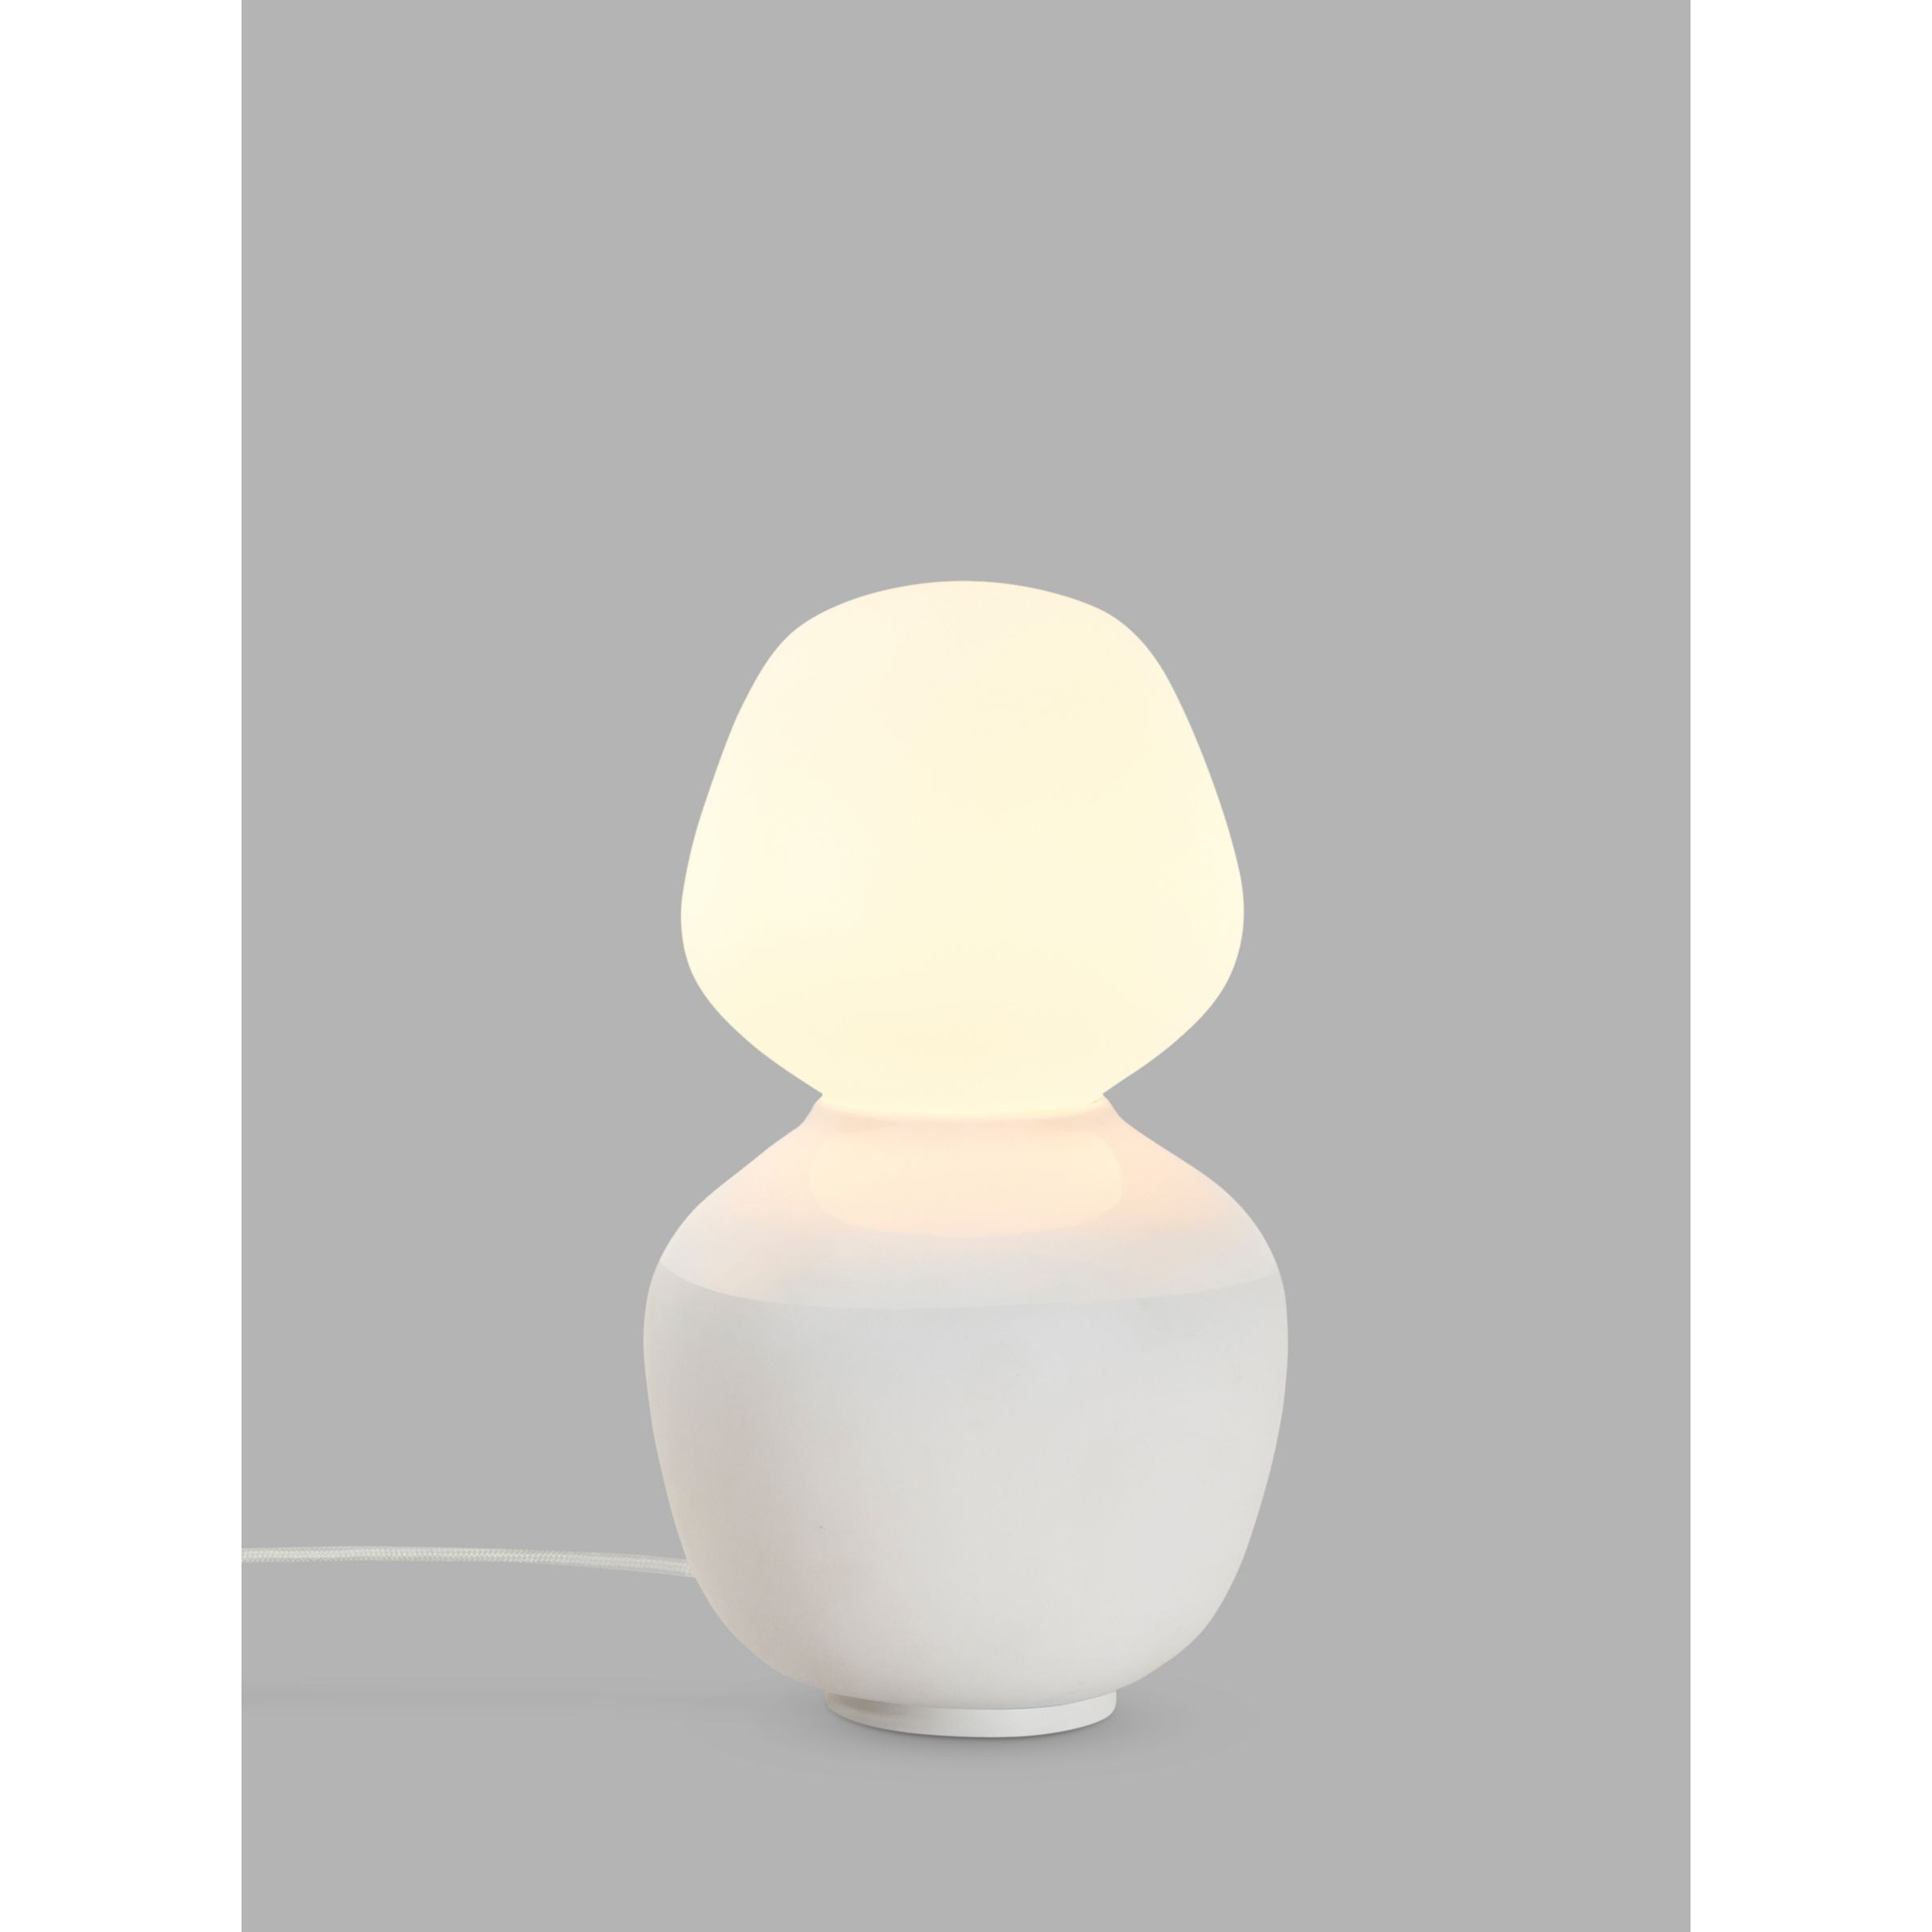 Tala Reflection Table Lamp with 6W Enno LED Bulb, White - image 1